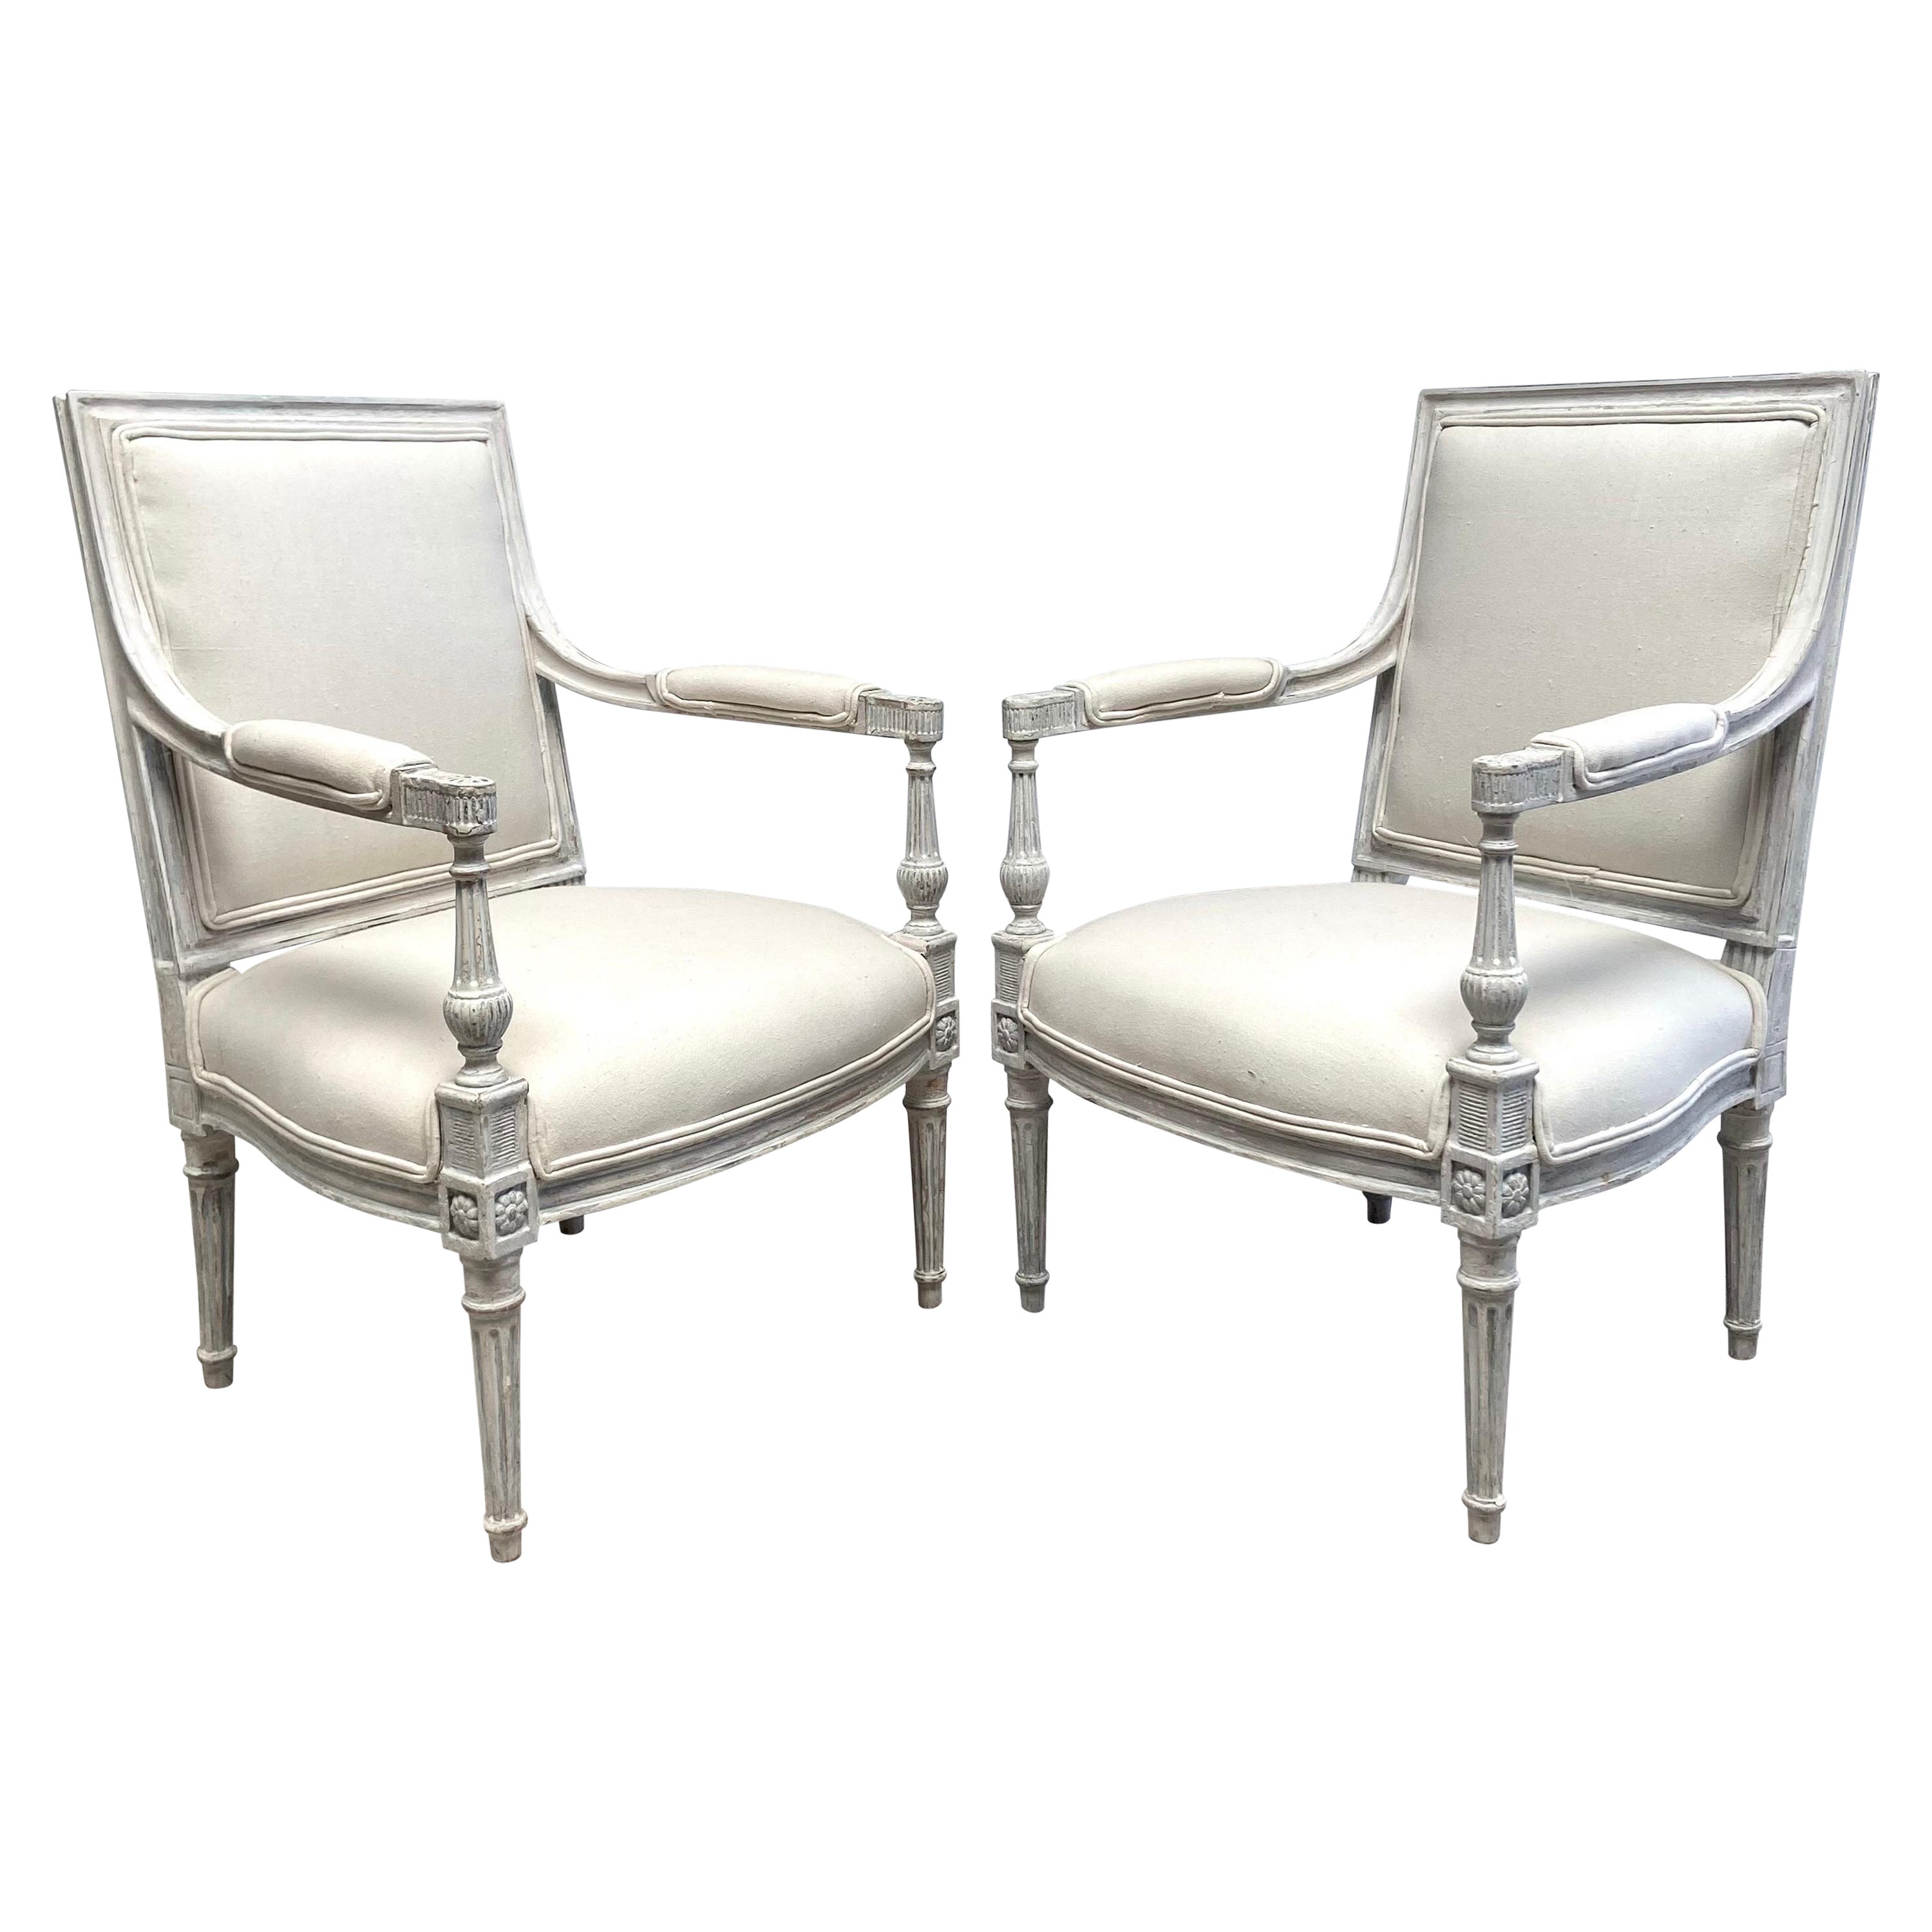 Paar neoklassizistische bemalte und gepolsterte Vintage-Sessel